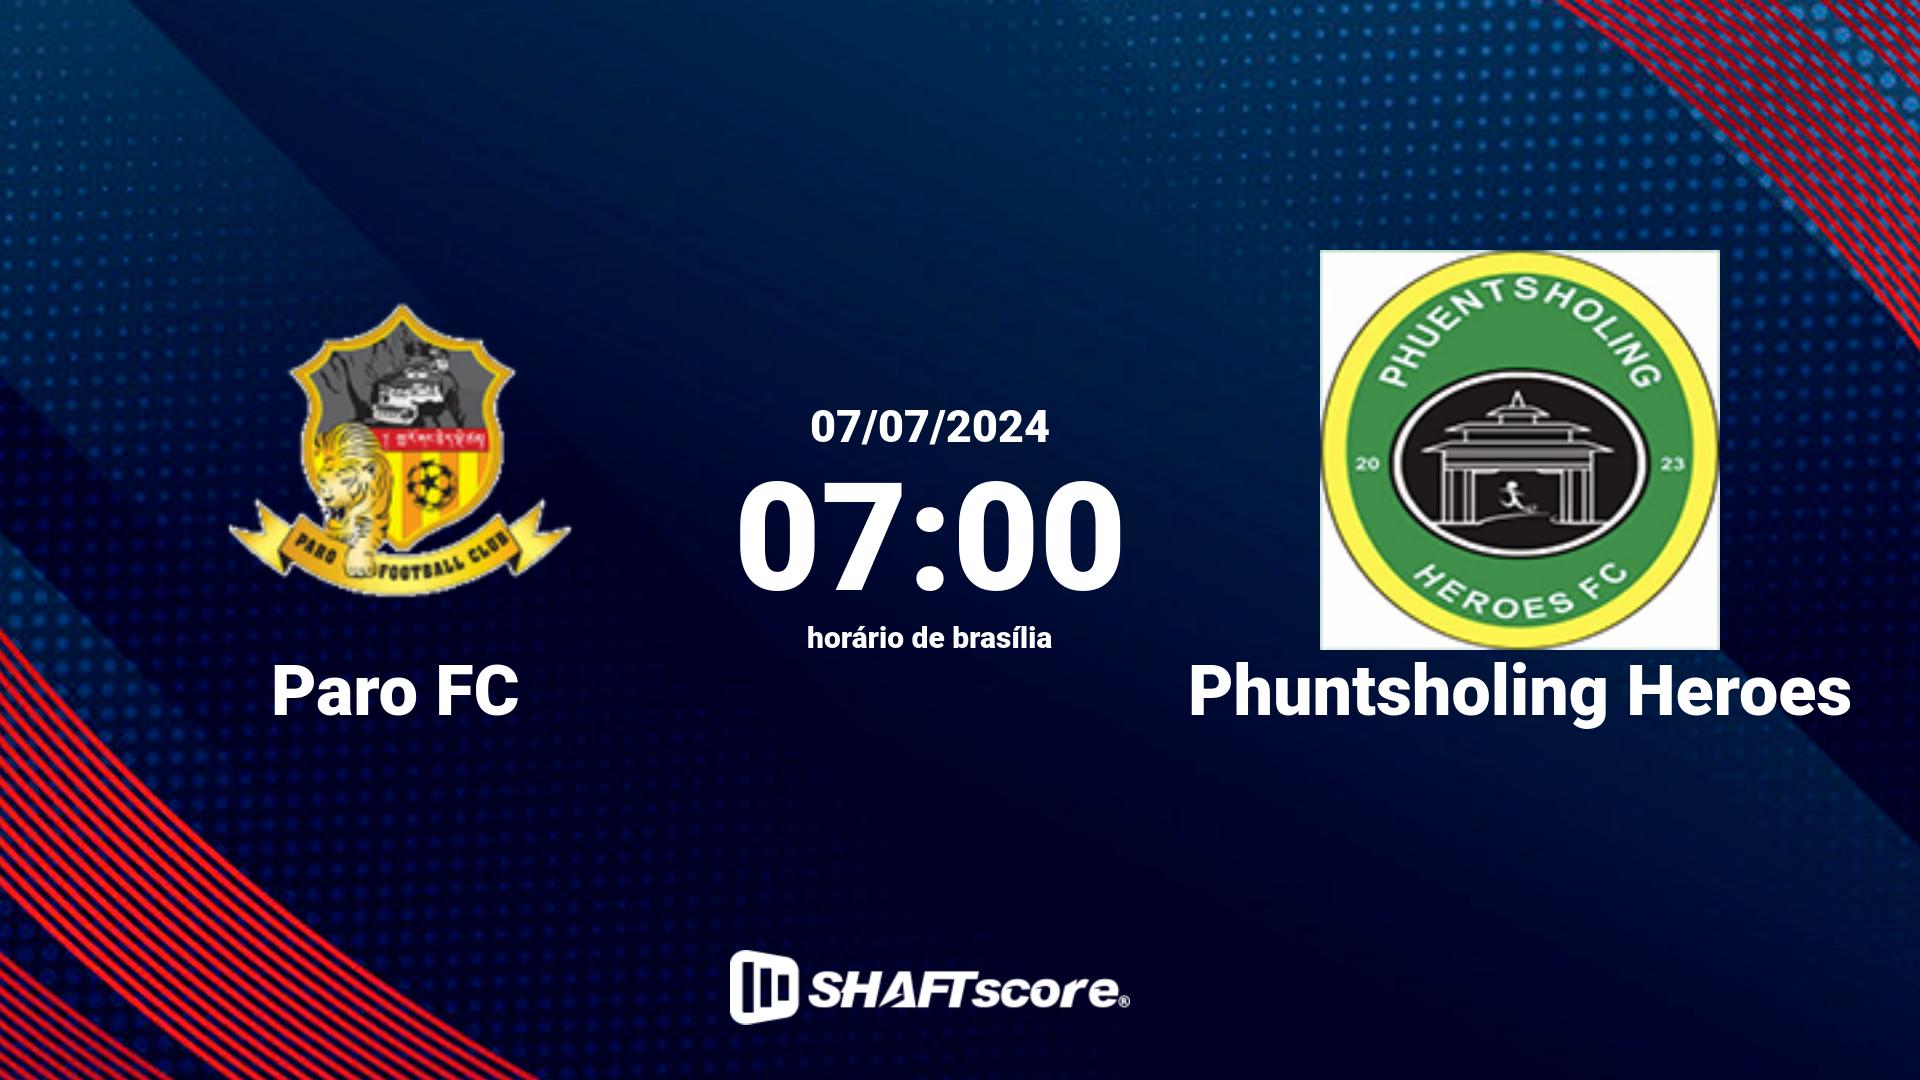 Estatísticas do jogo Paro FC vs Phuntsholing Heroes 07.07 07:00